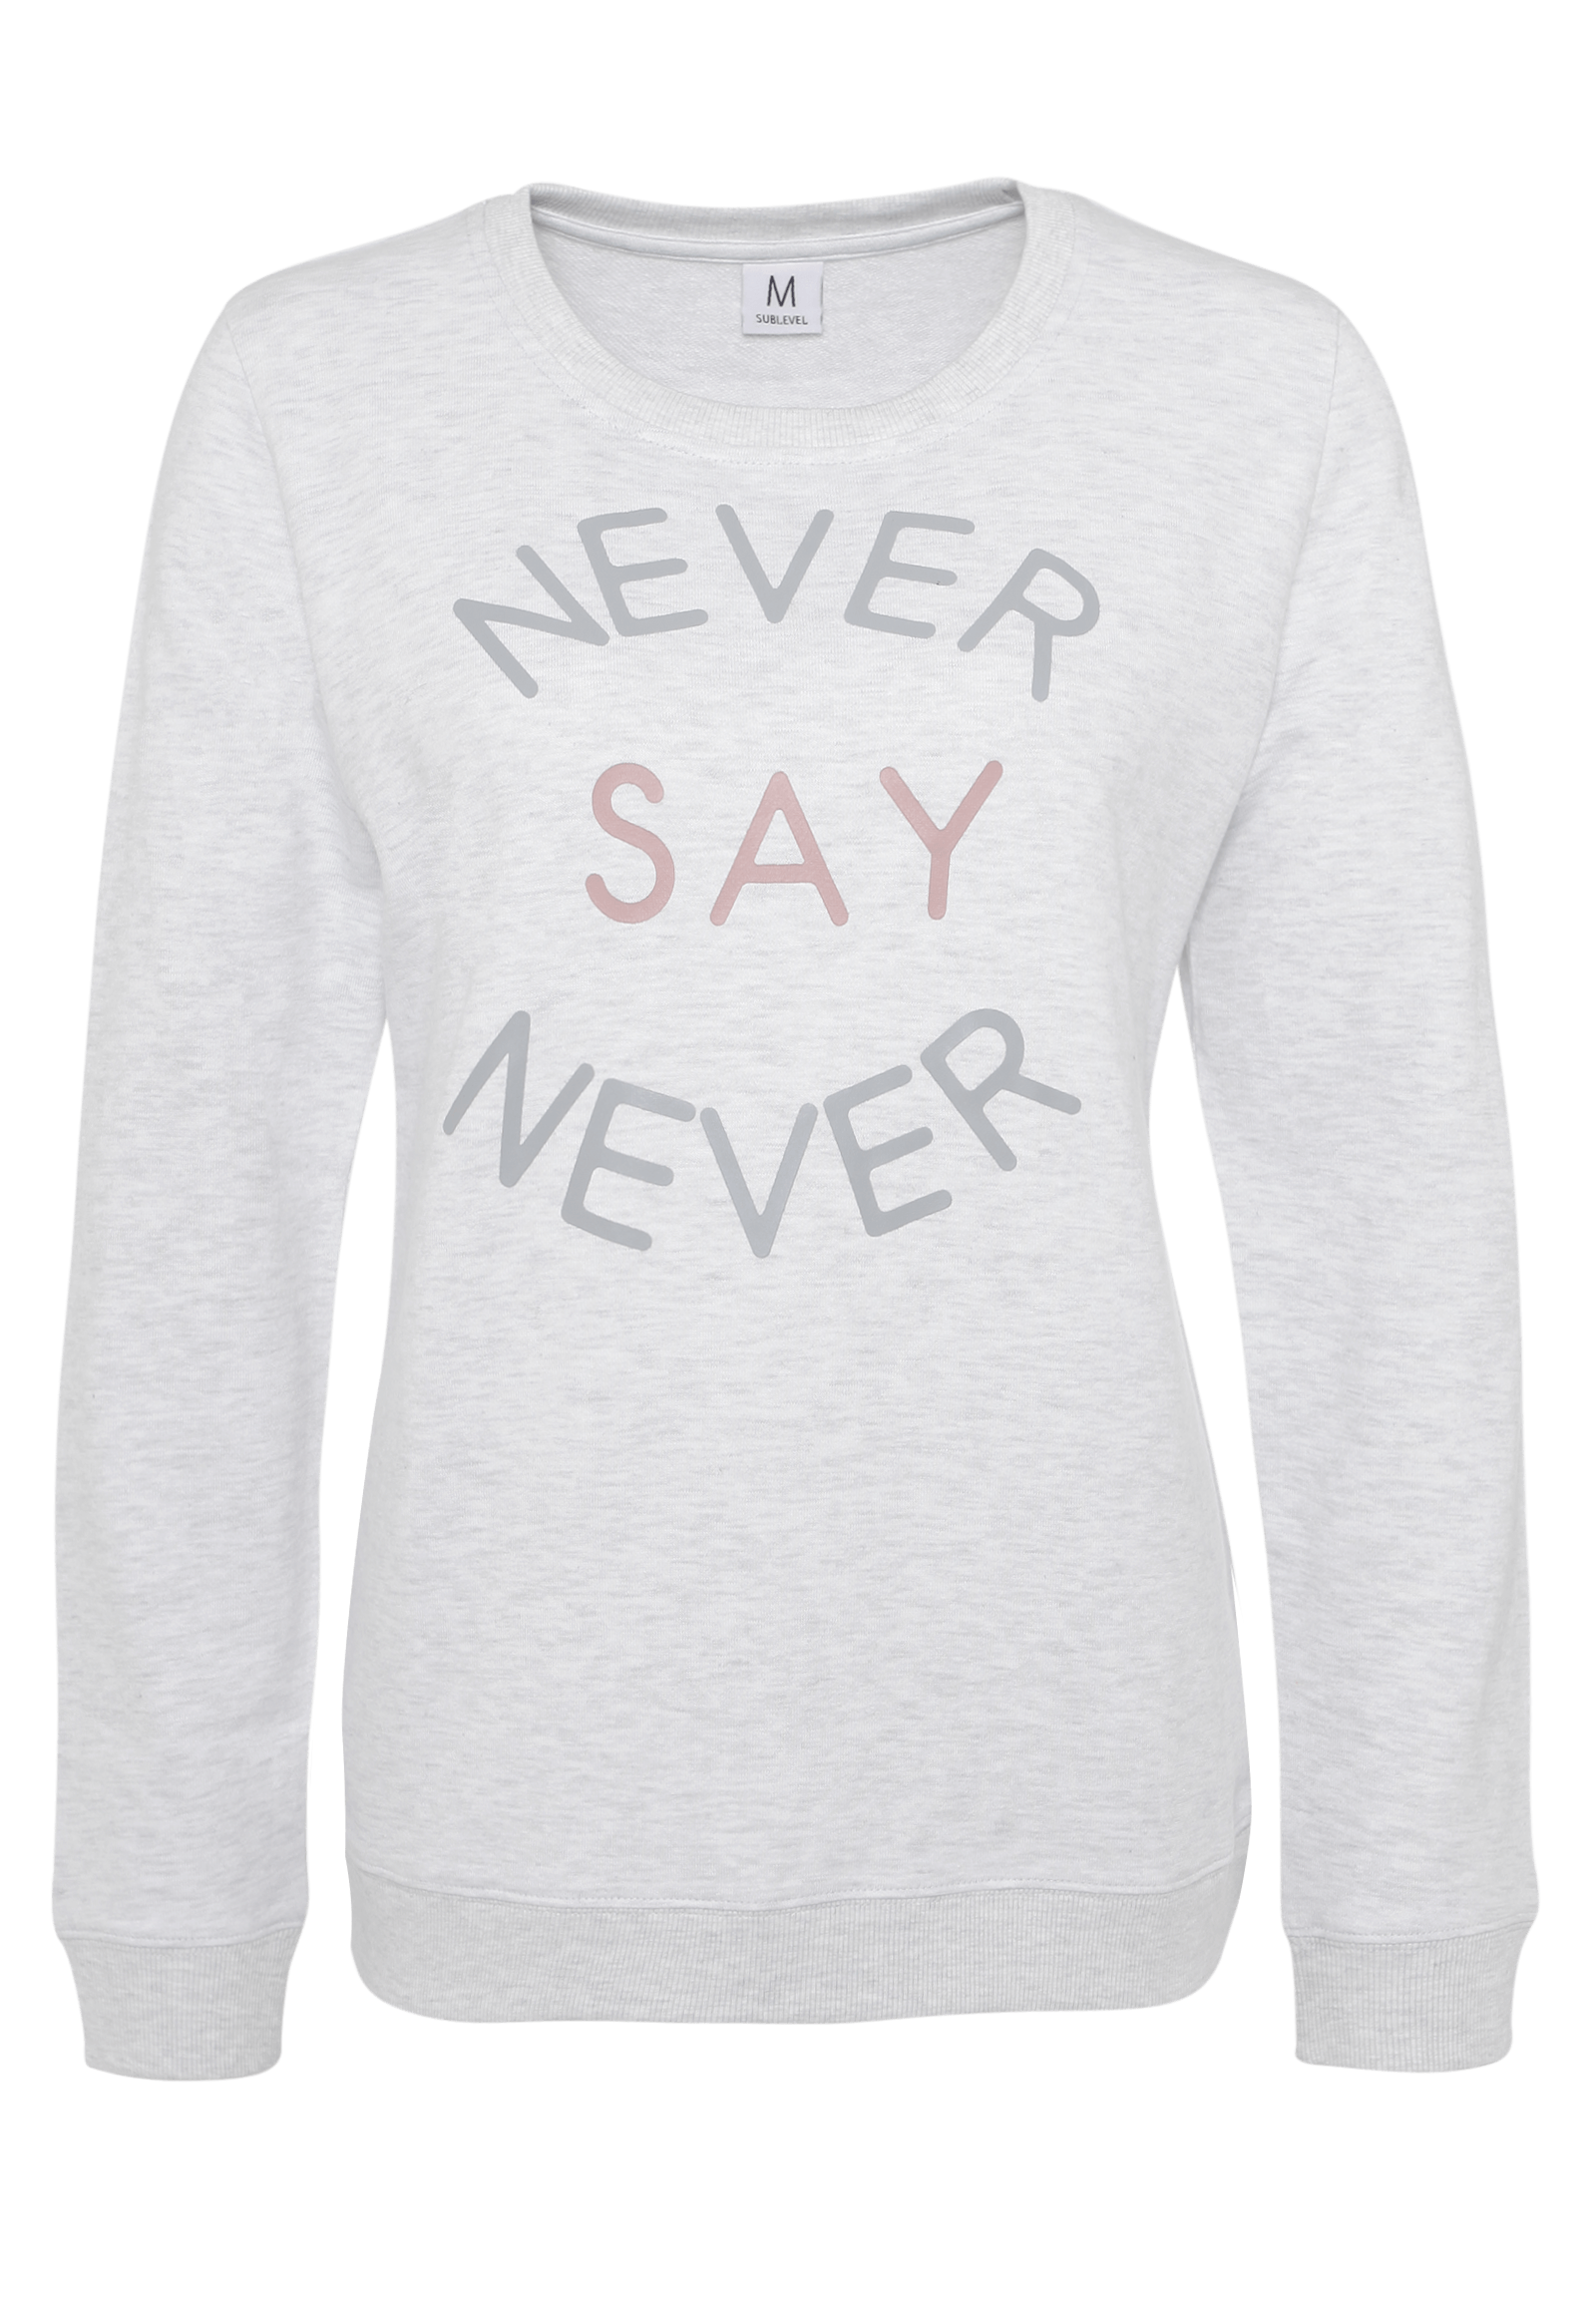 "Never say Never" Sweatshirt